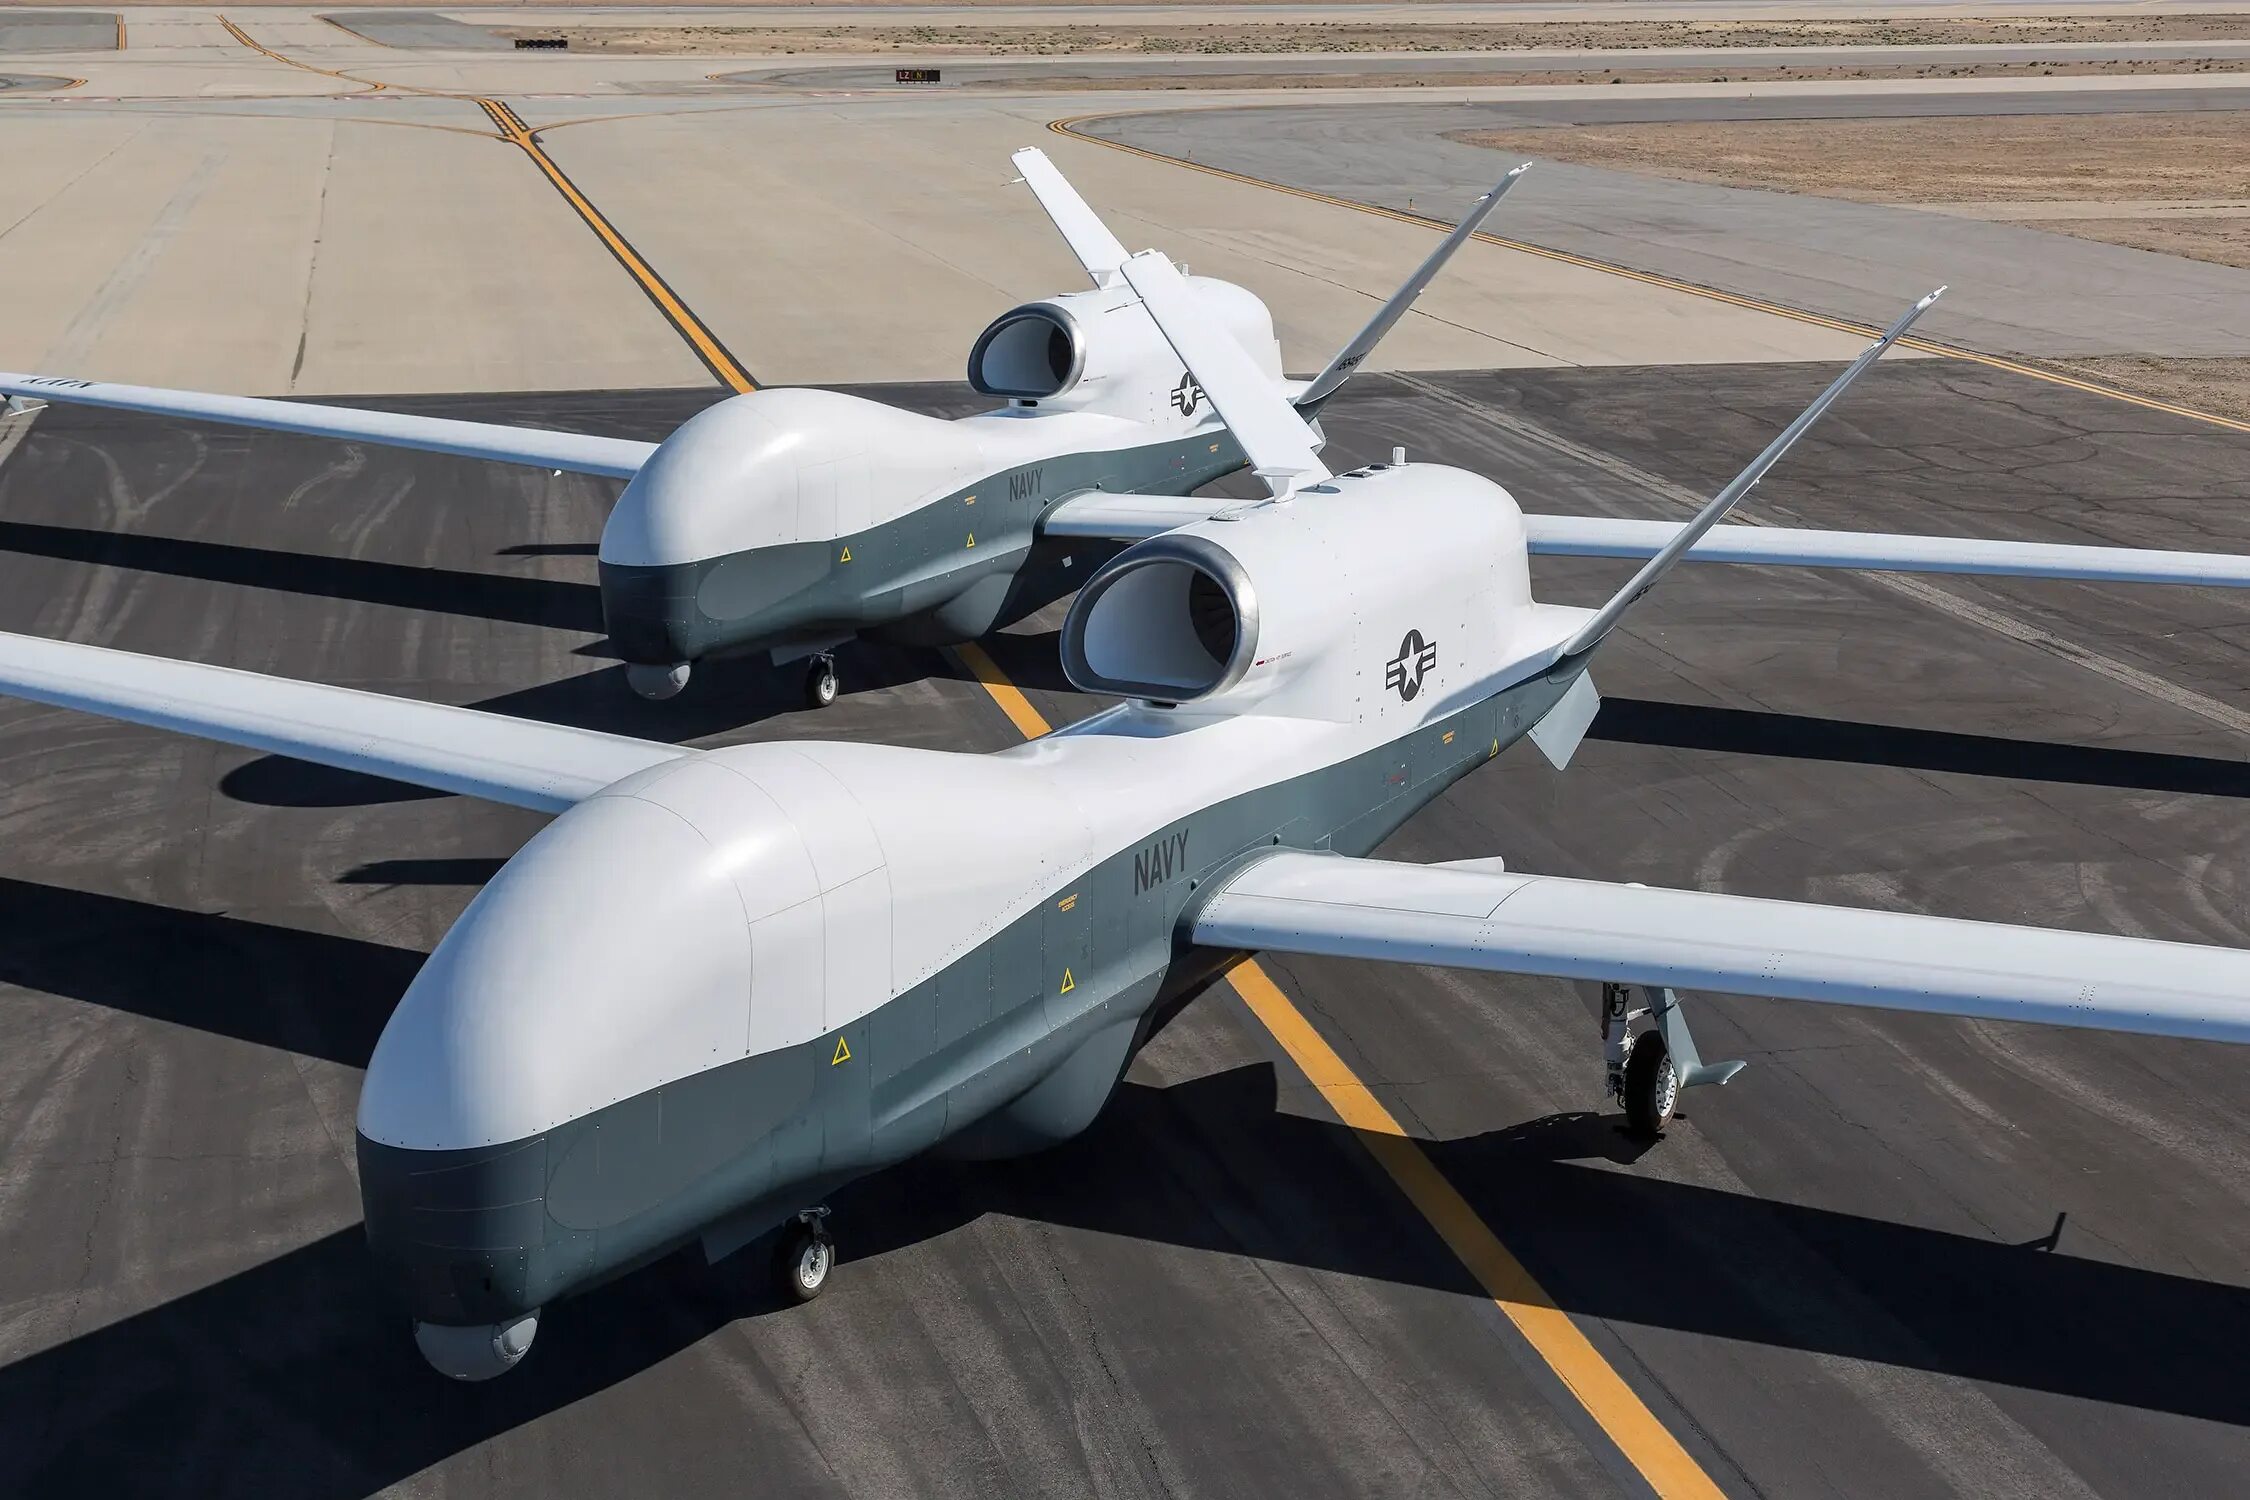 Unmanned aerial vehicle. Mq-4c Triton. БПЛА mq-4c Triton. Mq-4c Triton UAV. Northrop Grumman mq-4c Triton.